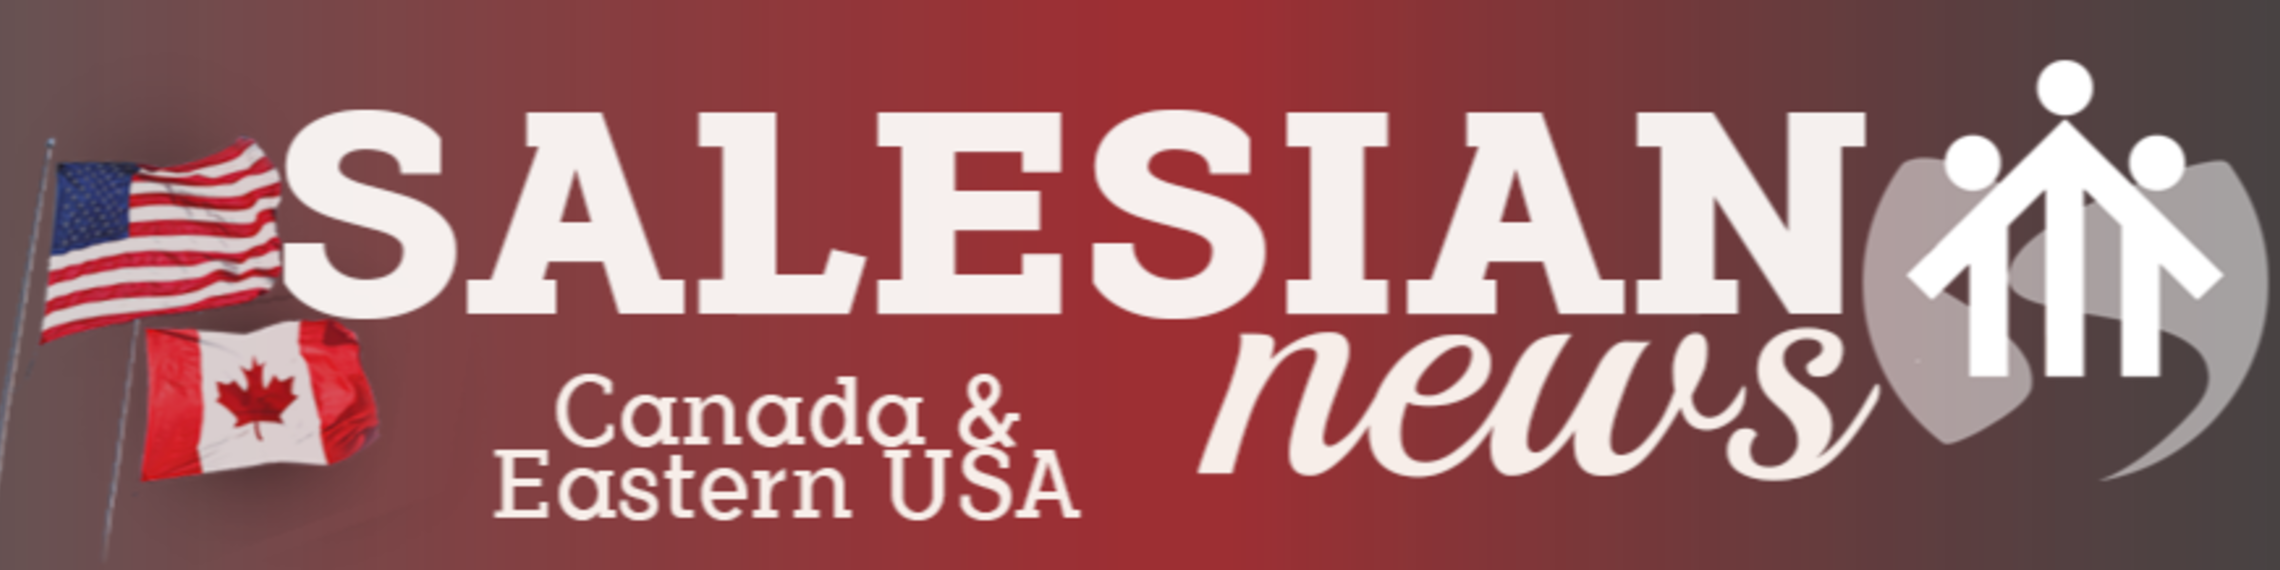 Salesian News Logo